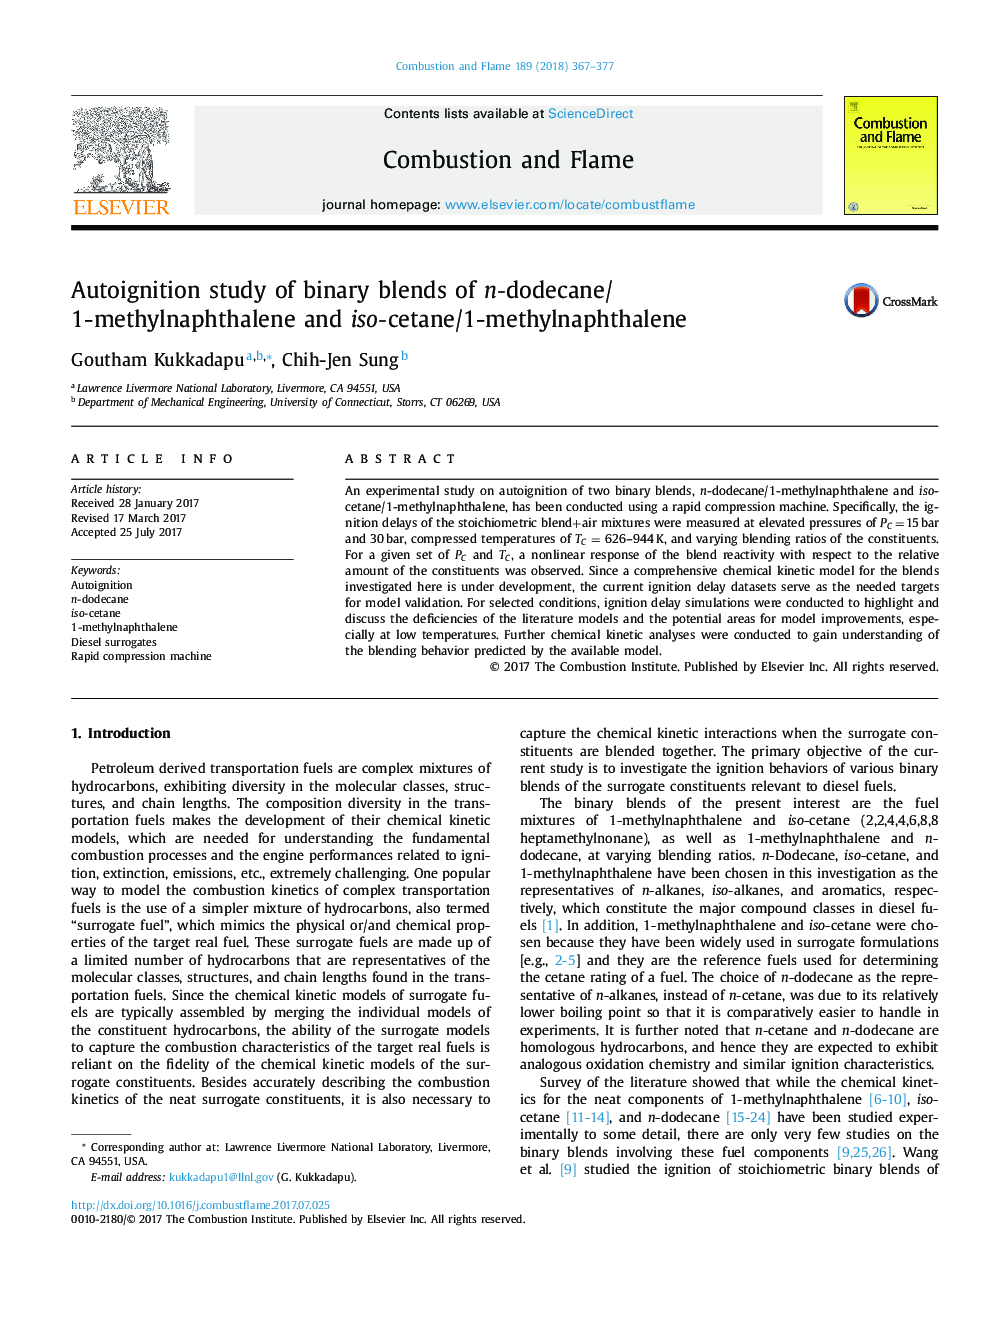 Autoignition study of binary blends of n-dodecane/1-methylnaphthalene and iso-cetane/1-methylnaphthalene